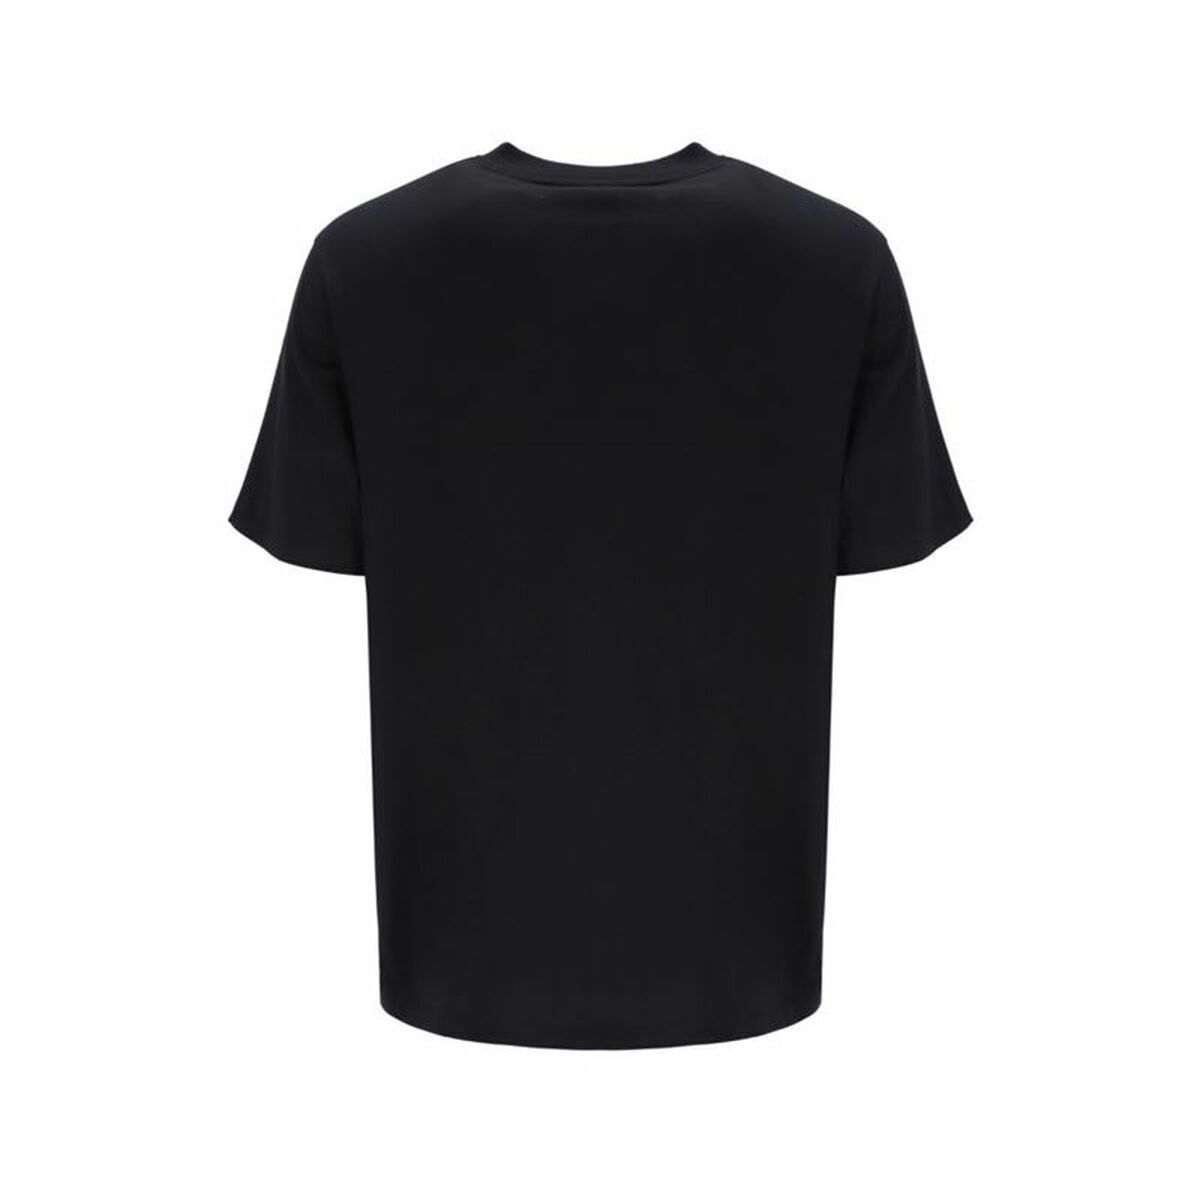 Short Sleeve T-Shirt Russell Athletic Emt E36221 Black Men